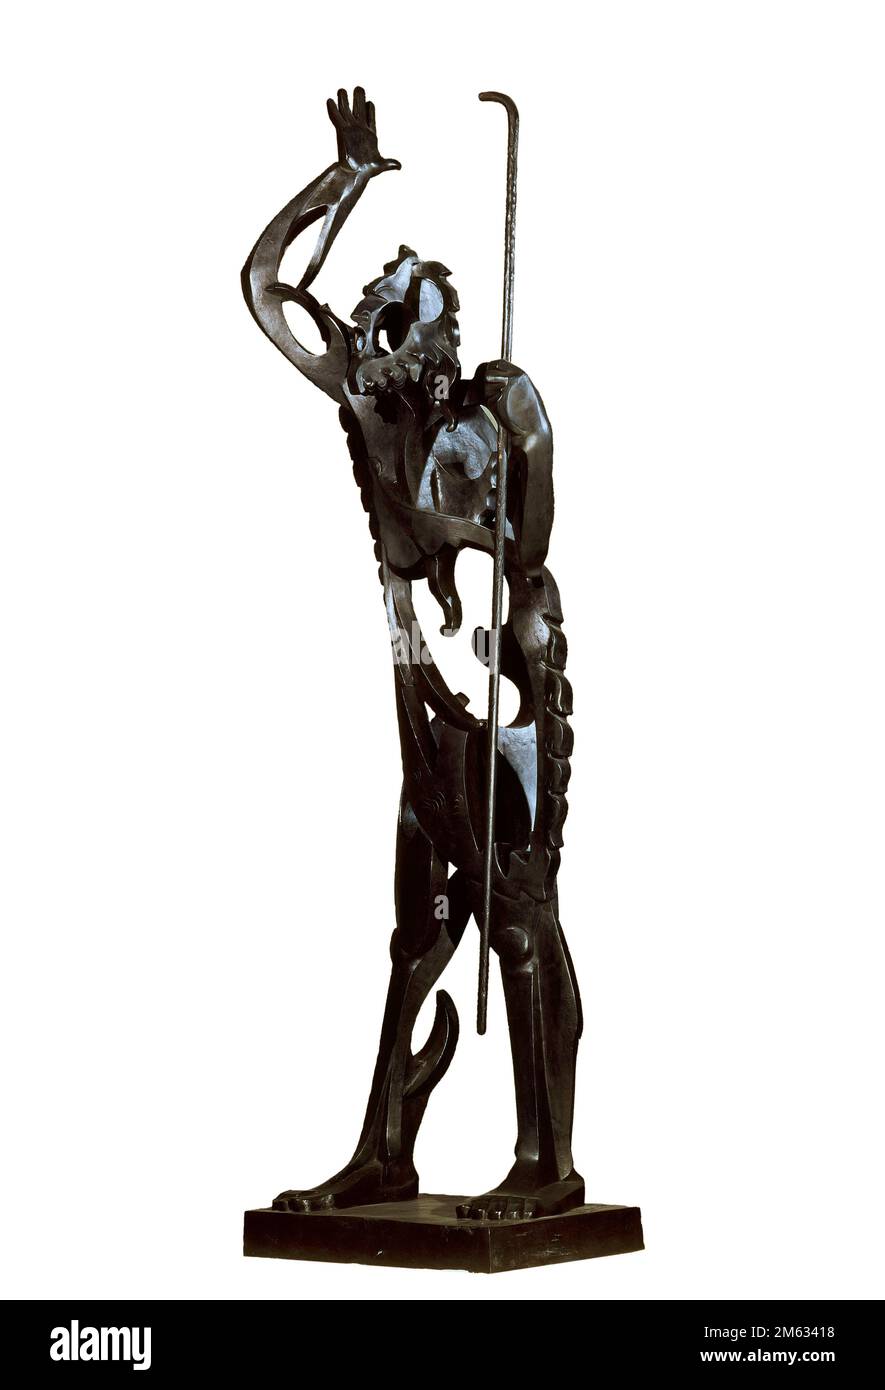 The Great Prophet - 1933 - 236x75x45 cm - bronze. Author: PABLO GARGALLO (1881-1934). Location: MUSEO REINA SOFIA-ESCULTURA. MADRID. SPAIN. SAN JUAN BAUTISTA. Stock Photo